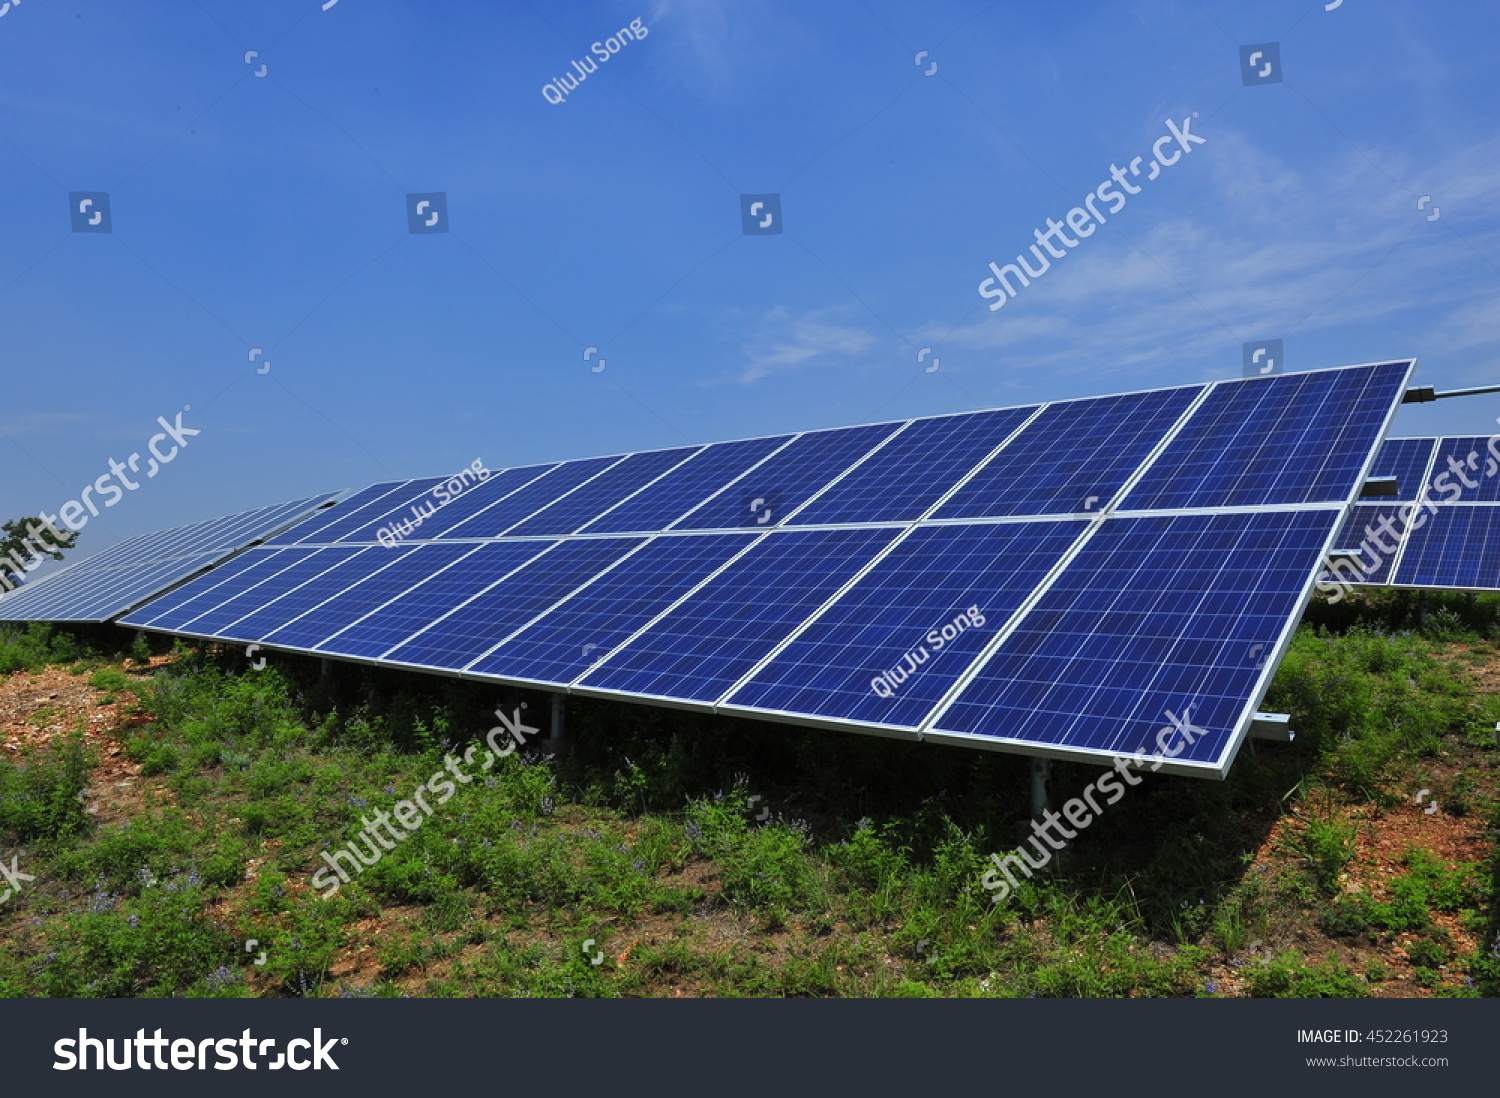 Solar Power Equipment Stock Photo 452261923 : Shutterstock